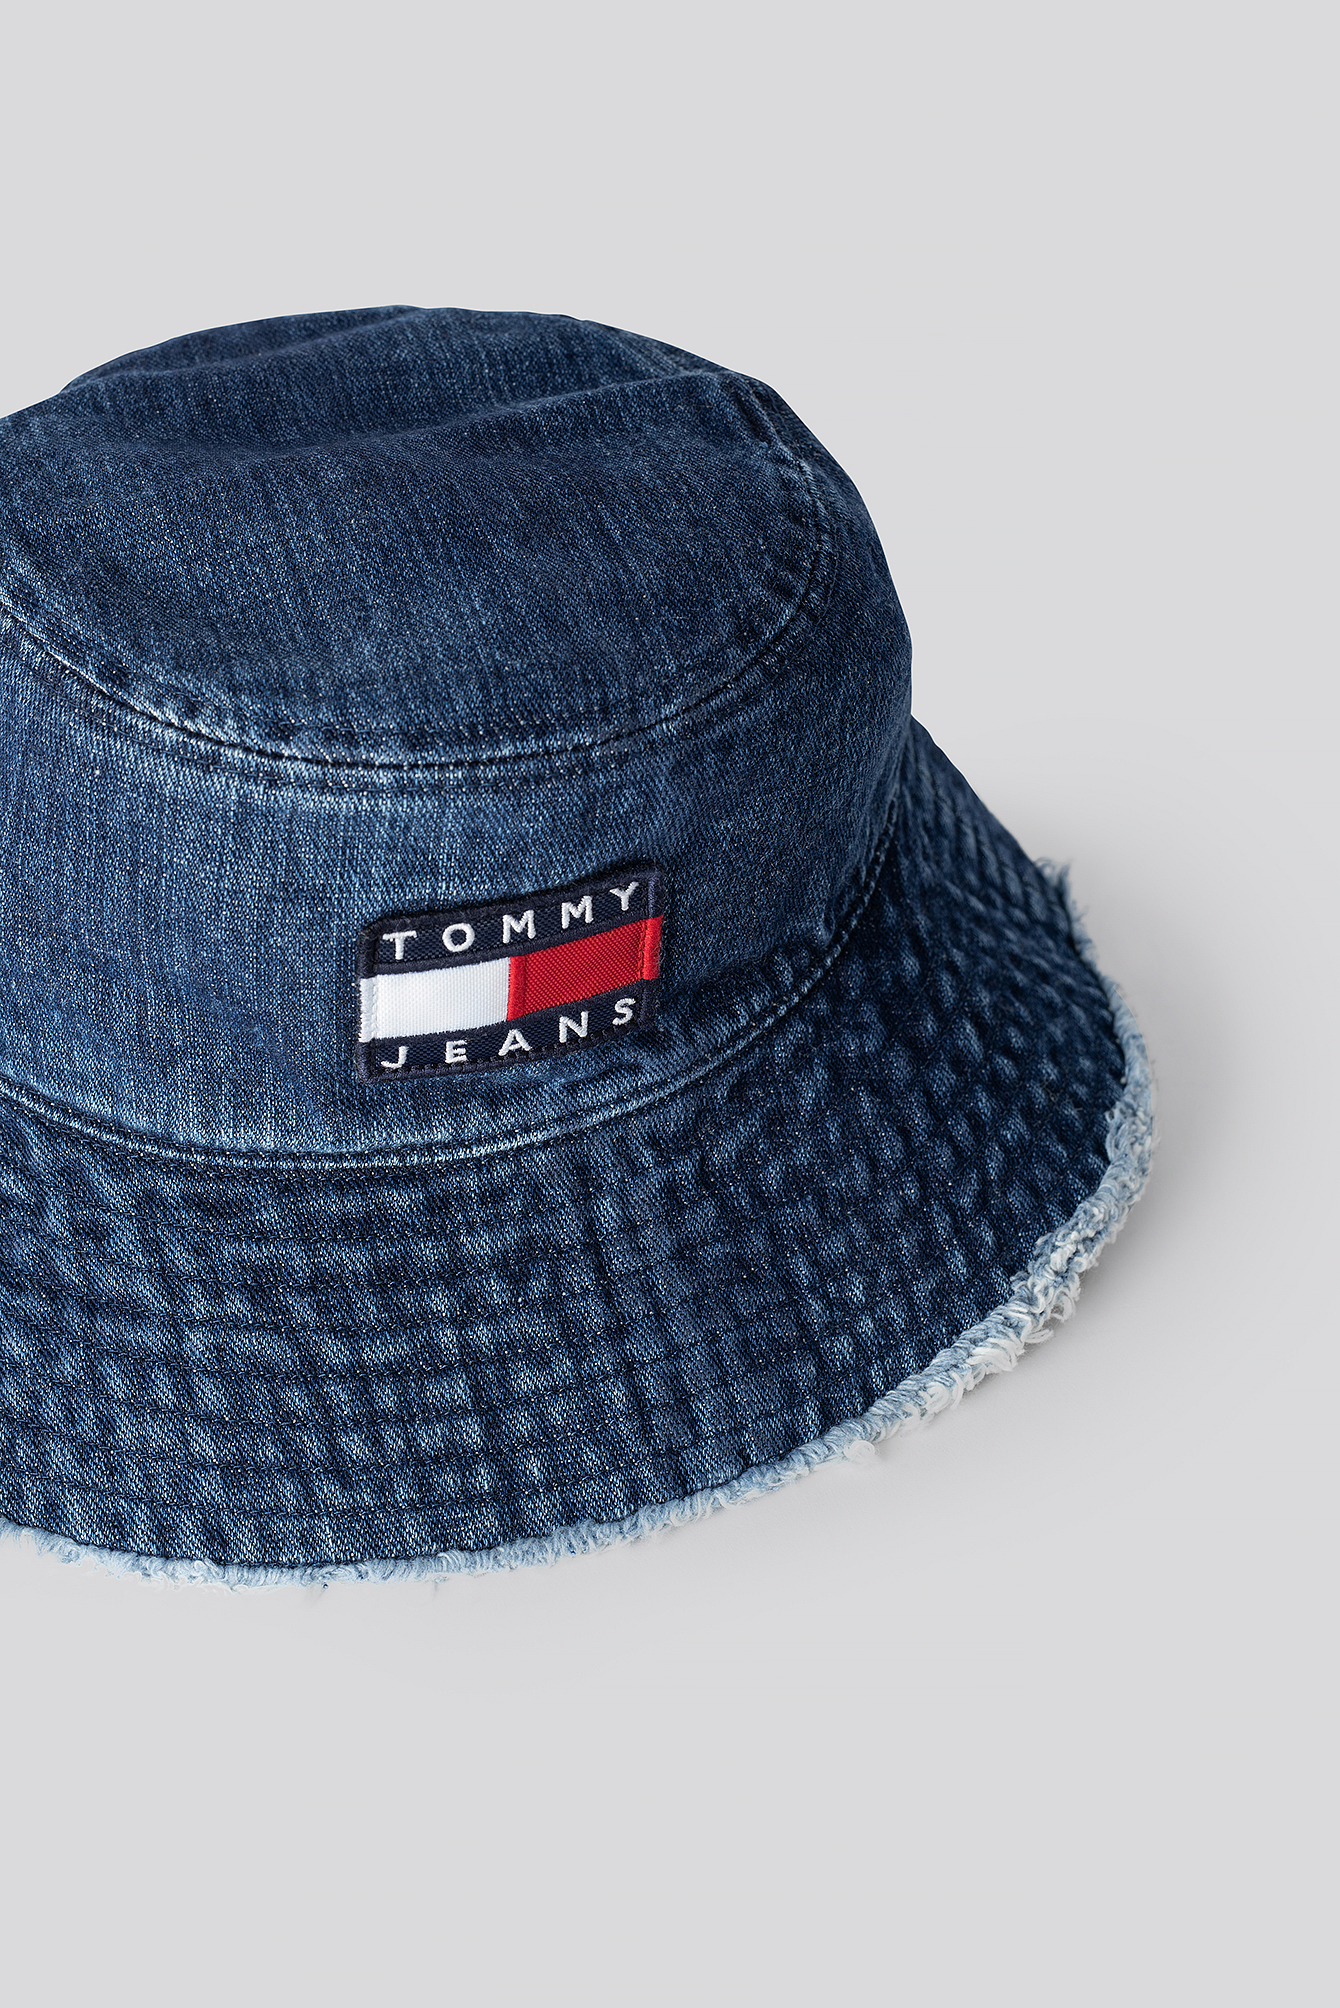 TOMMY JEANS Heritage Denim Bucket Hat Blue